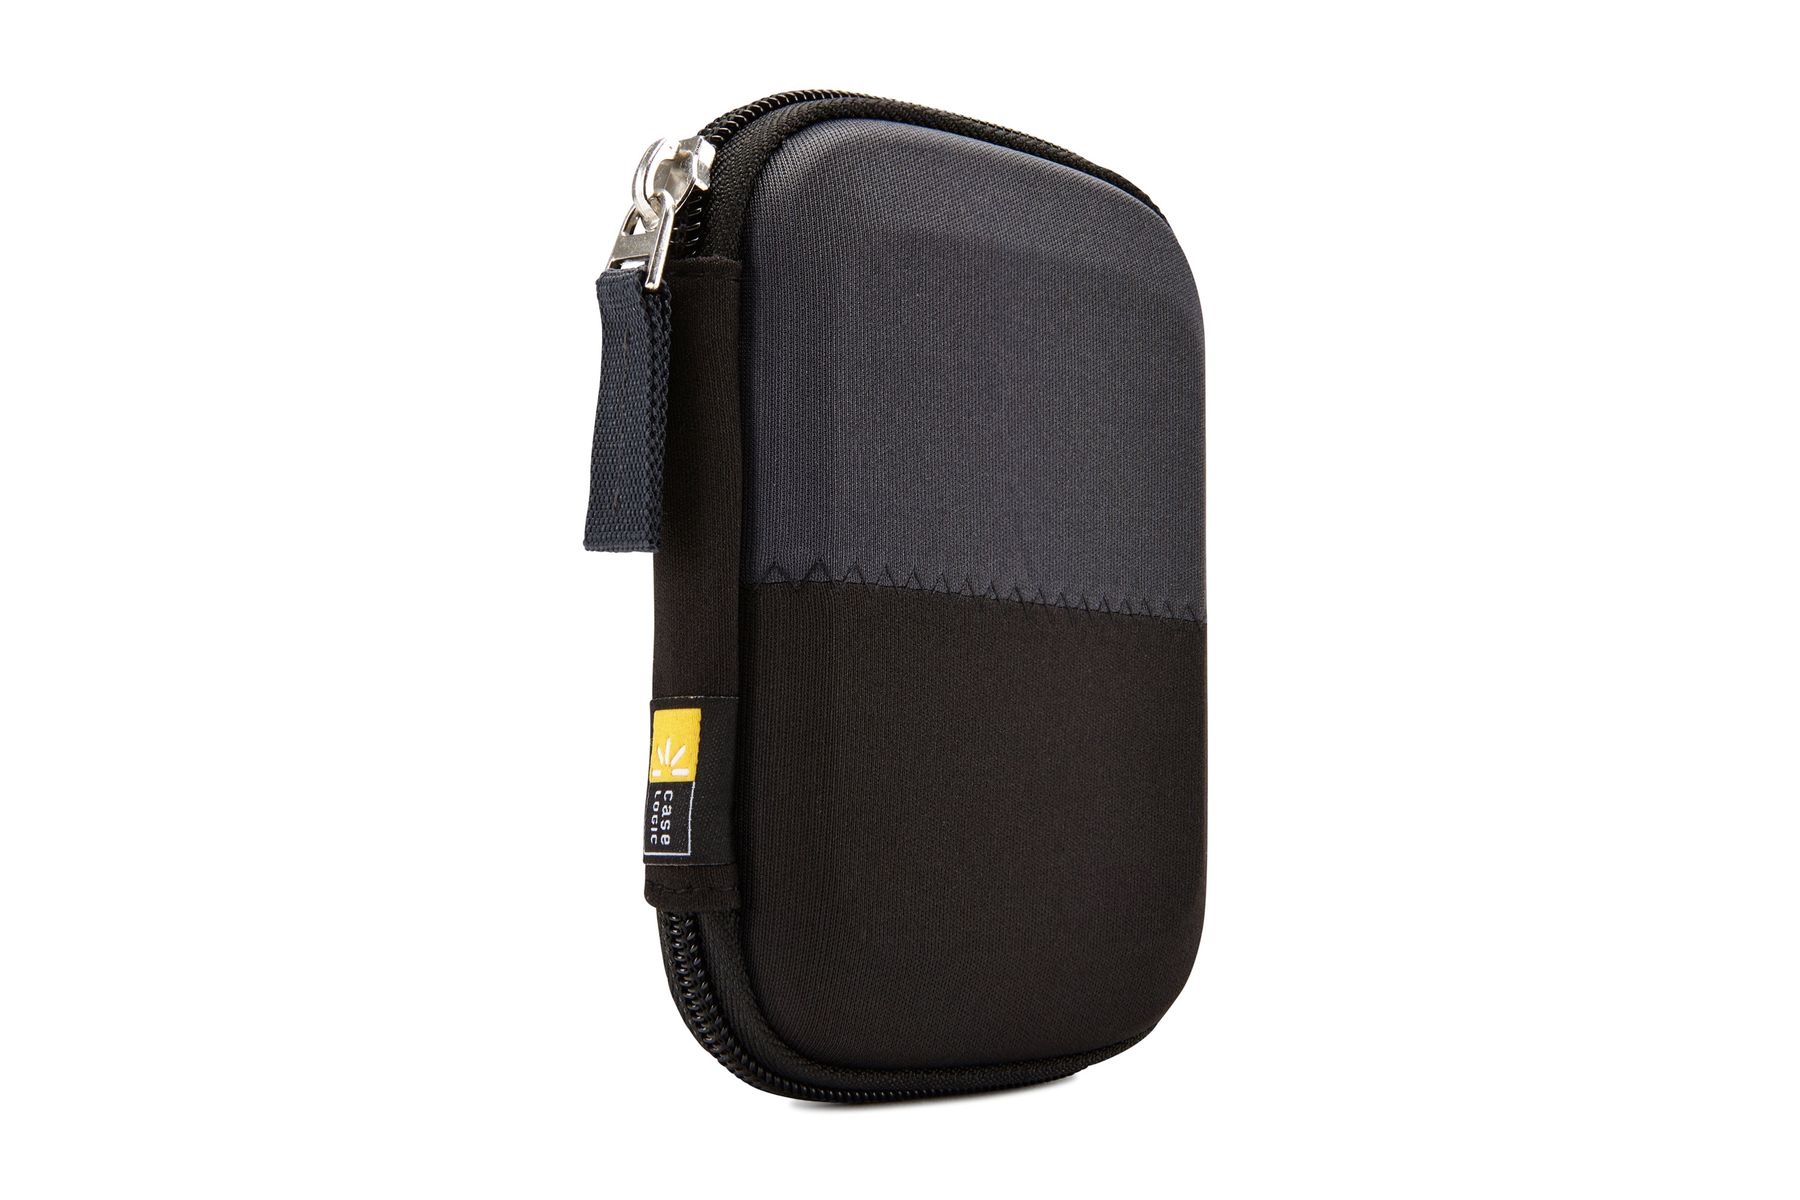 Case Logic Portable Hard Drive Case portable hard drive case